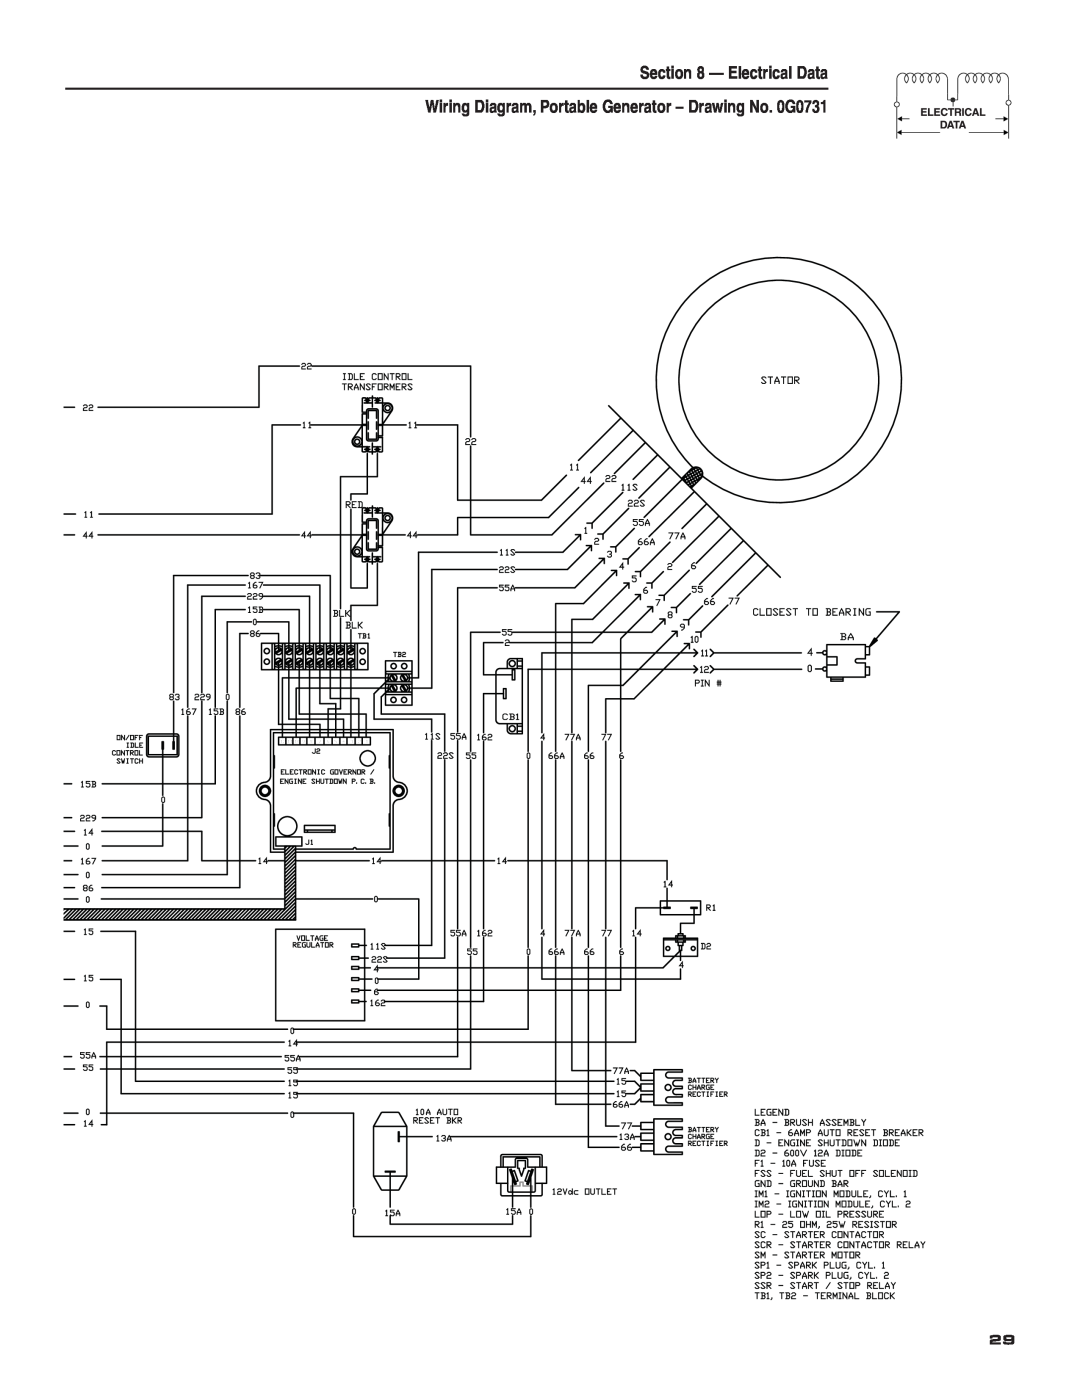 Guardian Technologies 004583-0 Electrical Data, Wiring Diagram, Portable Generator - Drawing No. 0G0731, Stator 